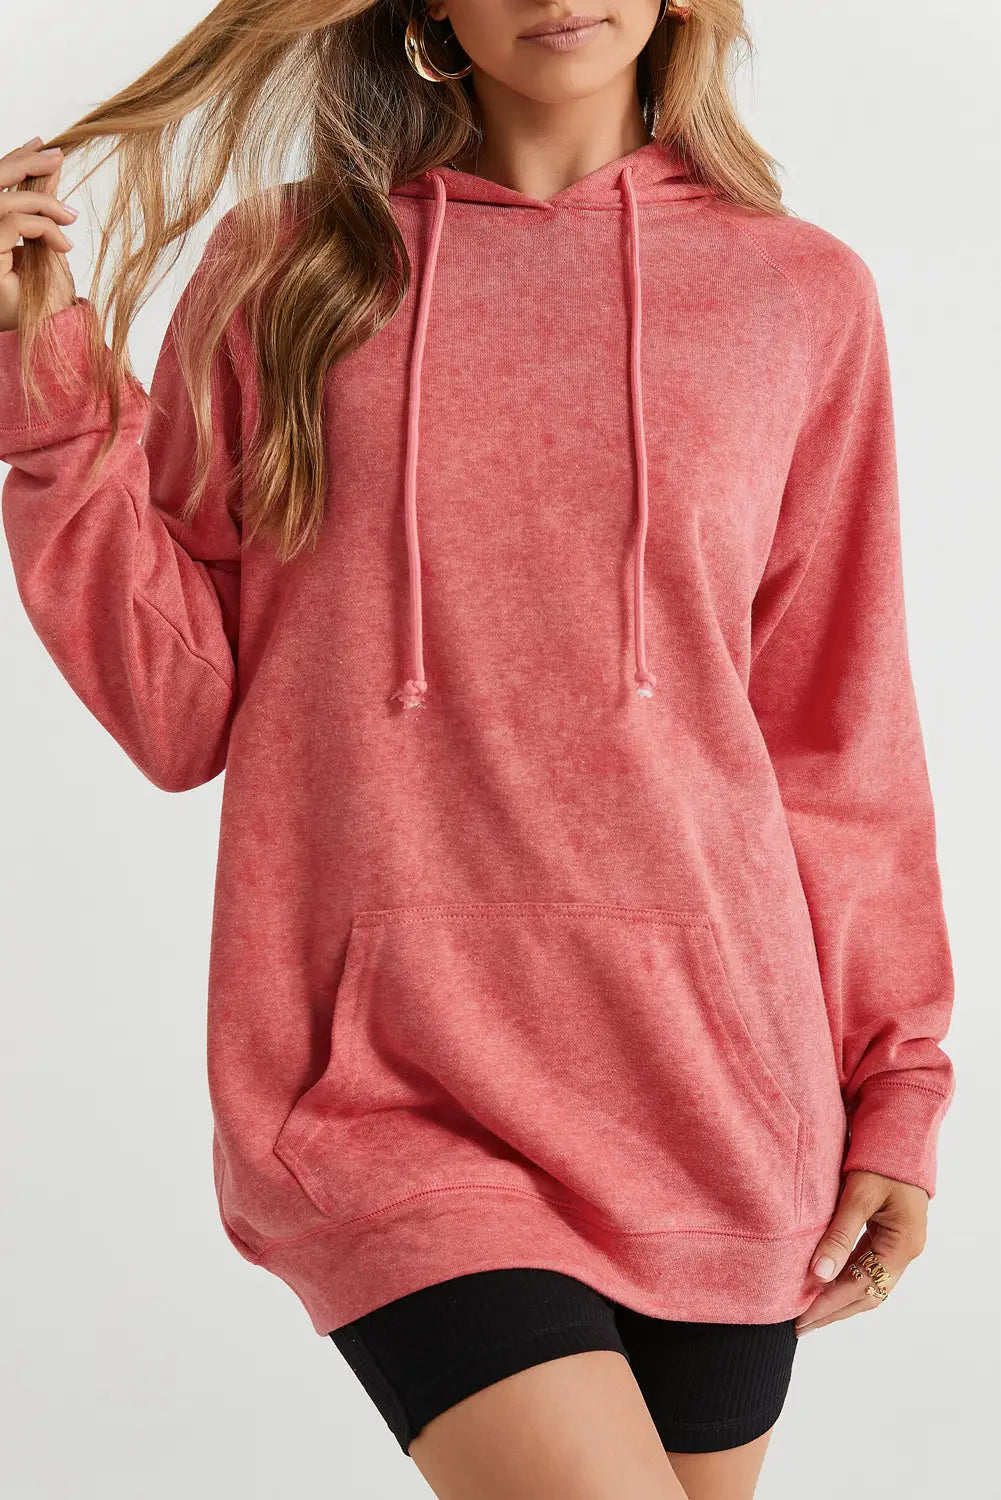 Mineral wash kangaroo pocket drawstring pullover hoodie - red / xl / 80% polyester + 20% cotton - sweatshirts & hoodies